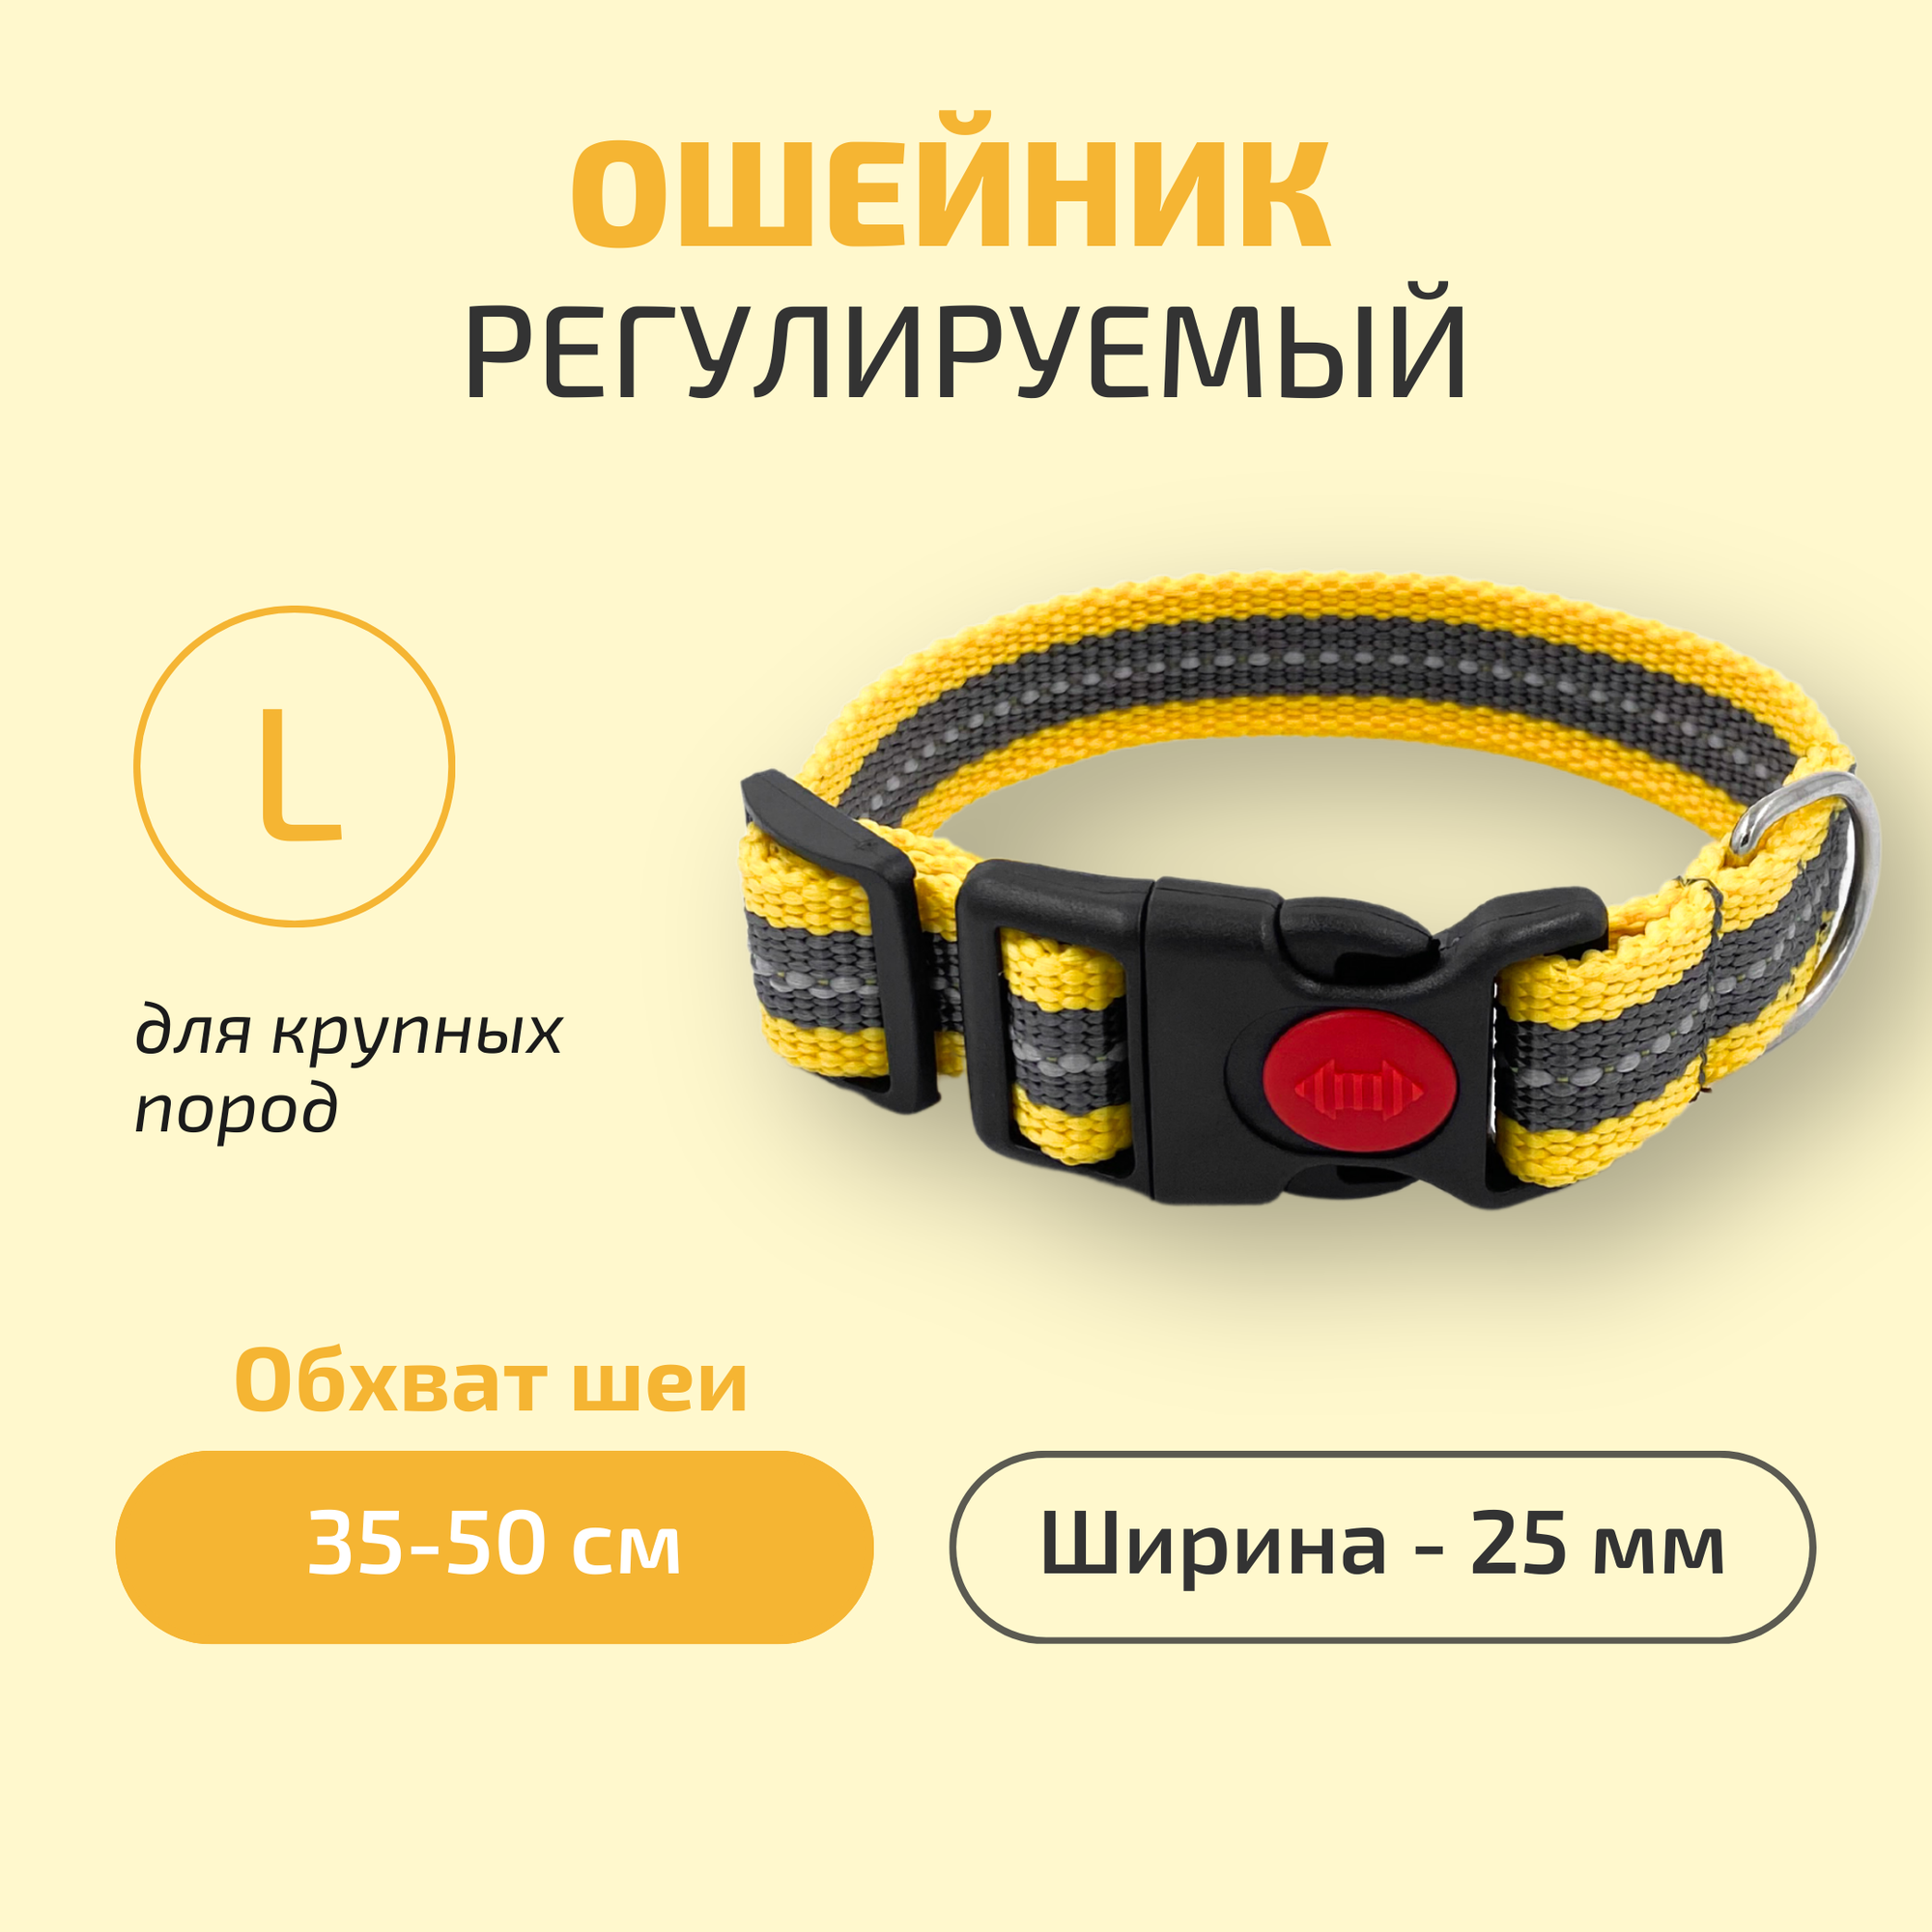 Ошейник для собак Povodki Shop желто-серый, ширина 25 мм, обхват шеи 35-50 см